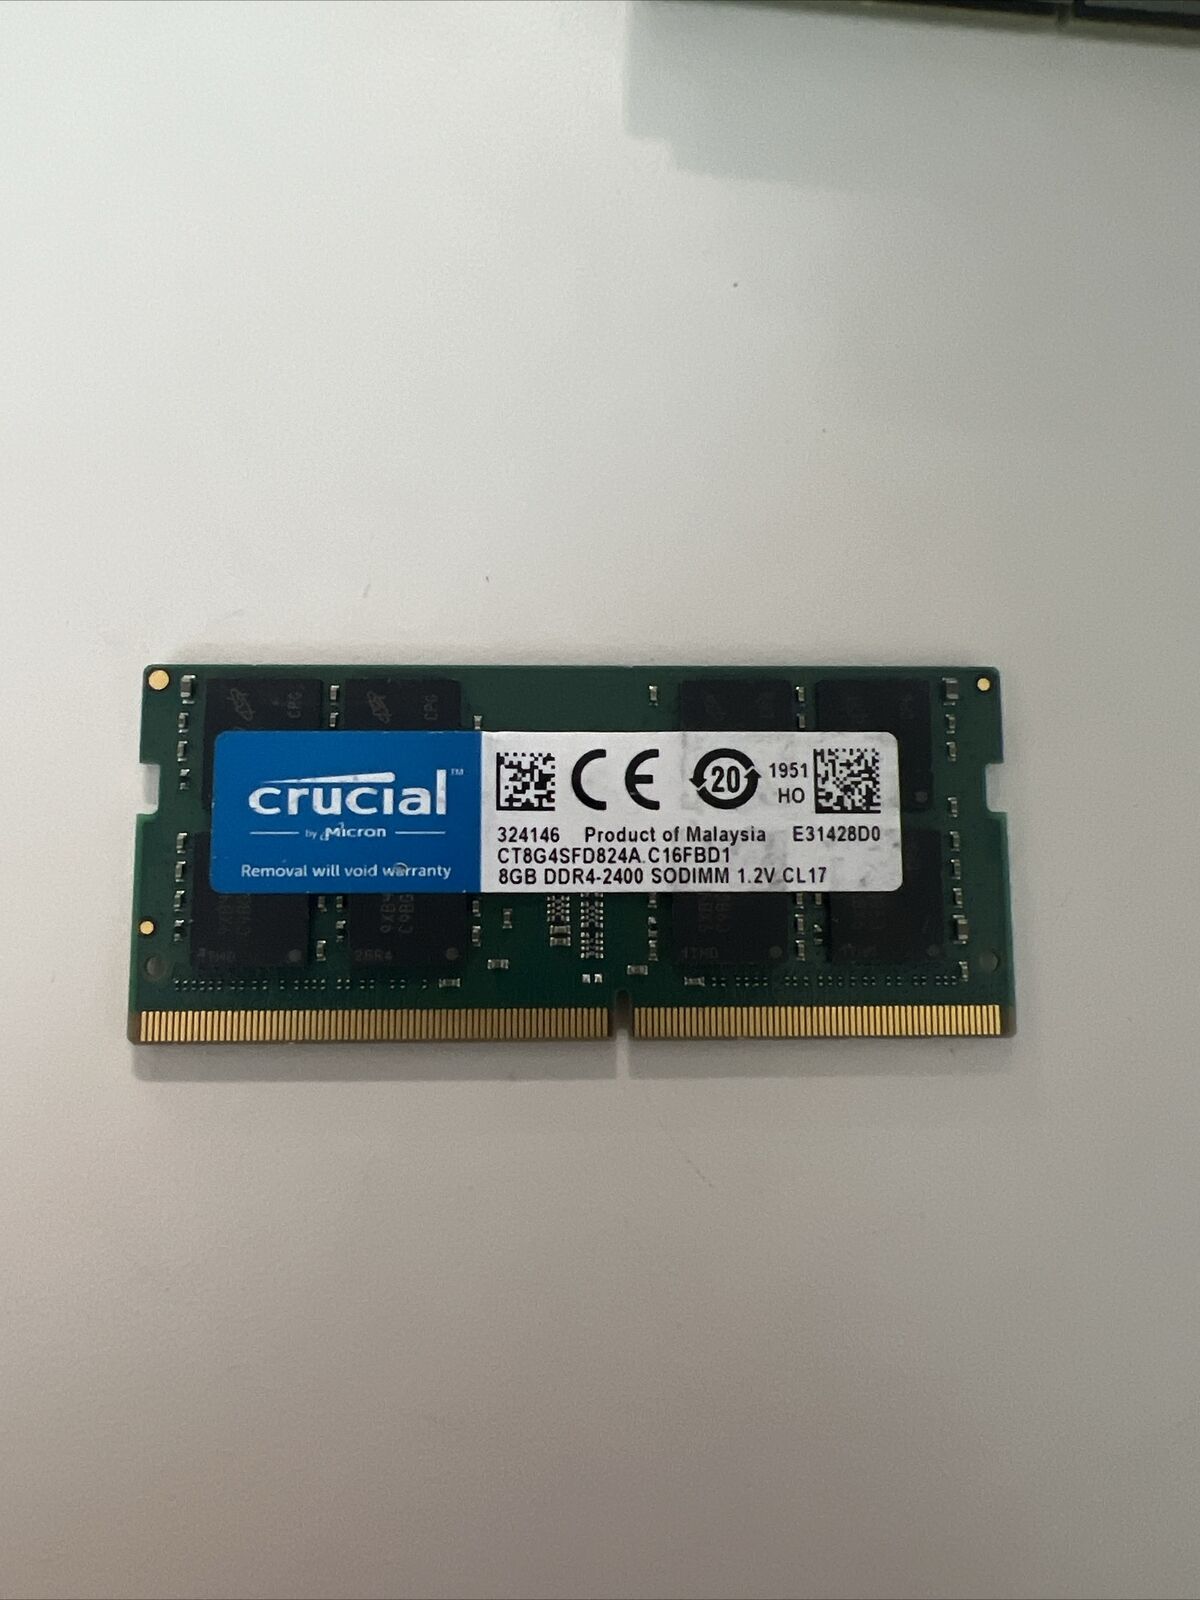 (8) Crucial 8GB DDR4-2400 PC4-19200 Sodimm Laptop Memory Ram- 